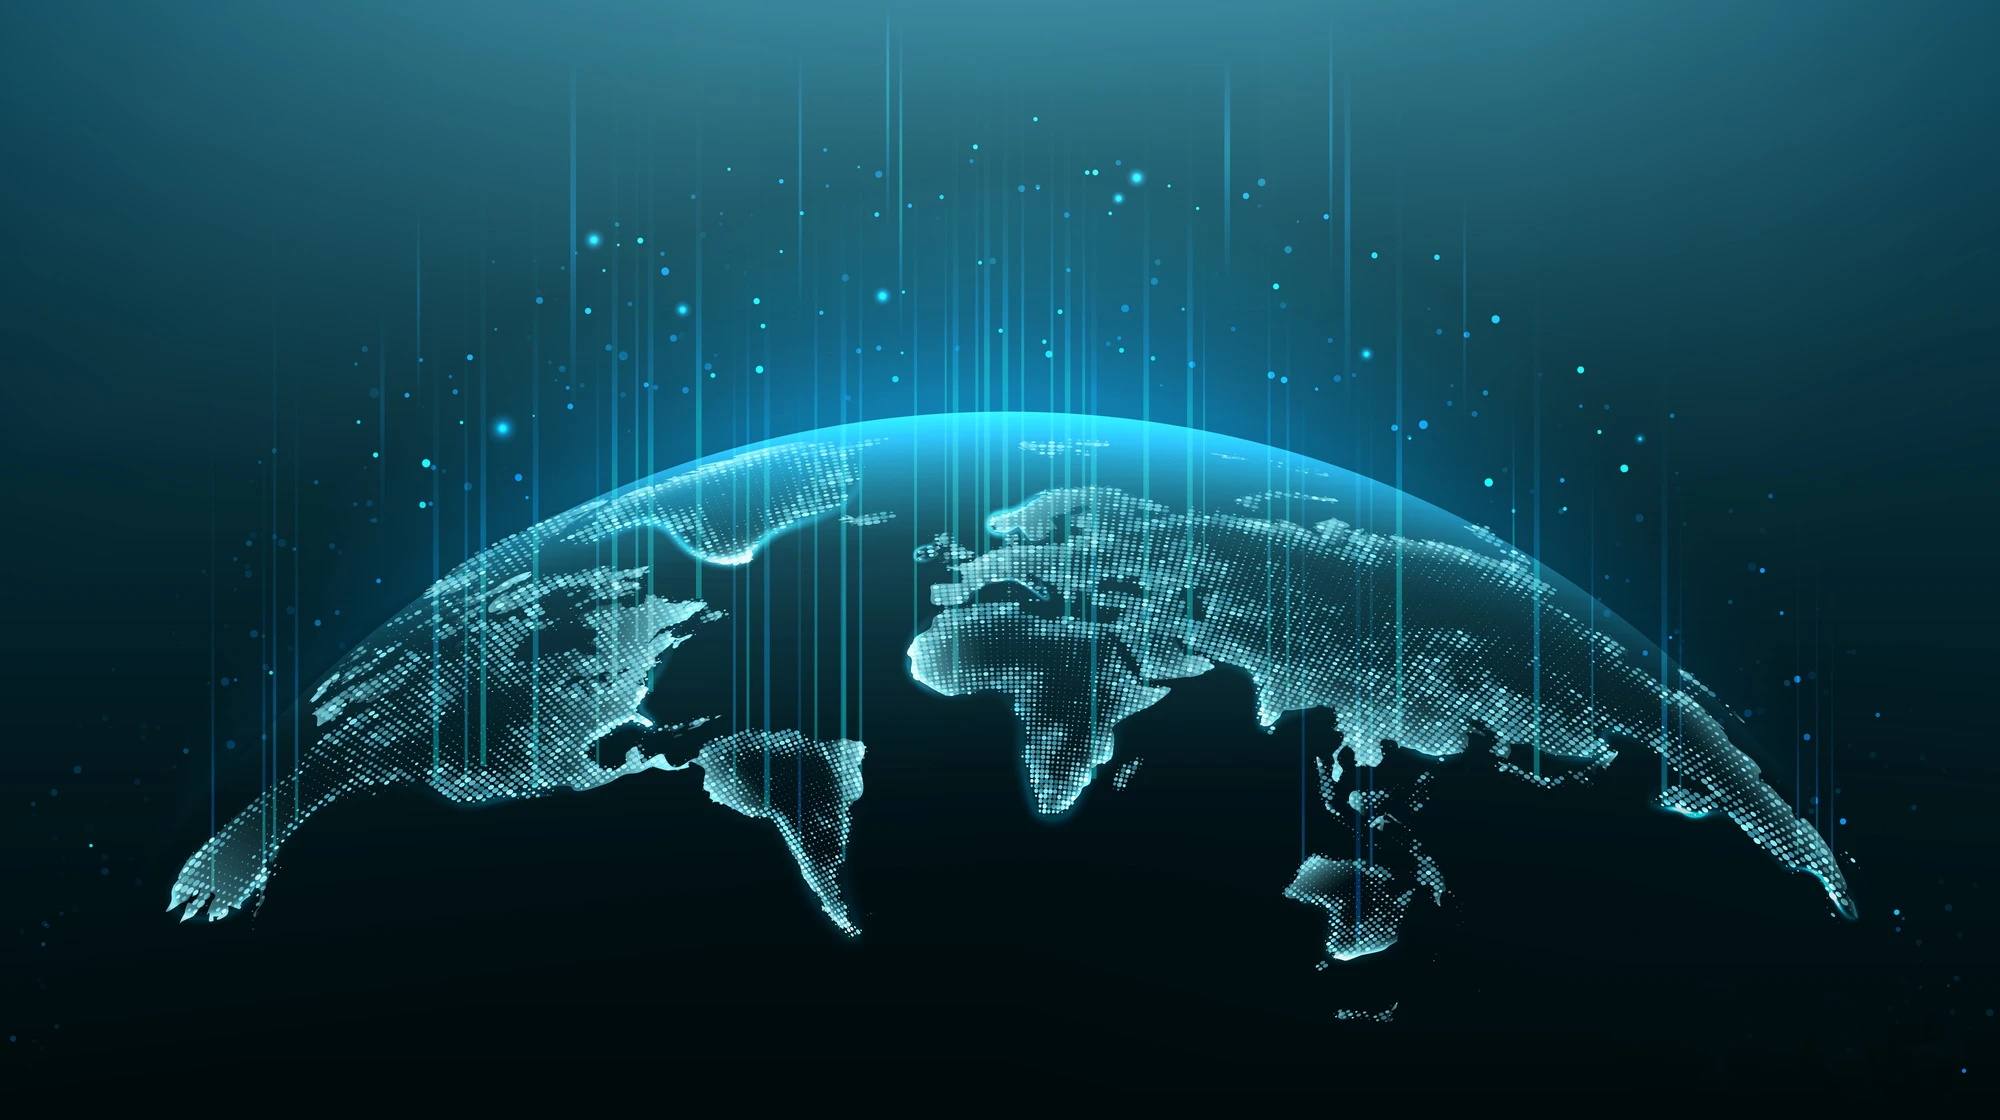 artwork of earth showing digital network